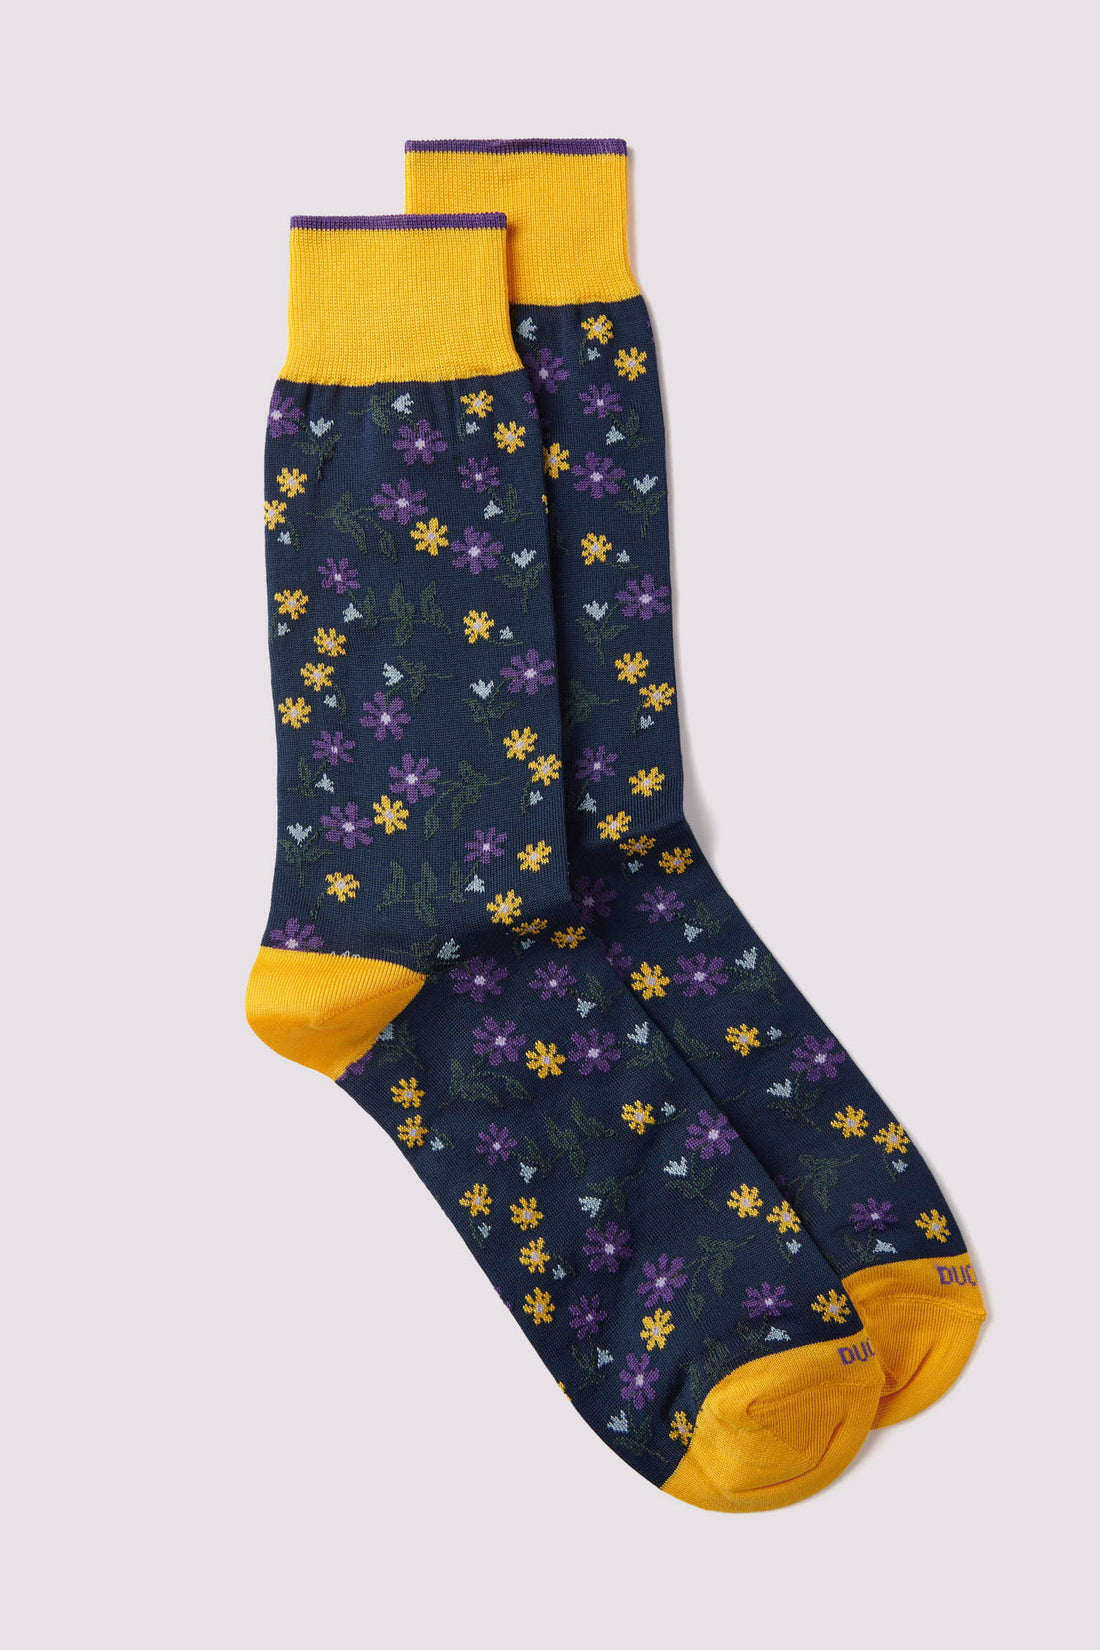 Garden Floral Socks in Spectra Yellow